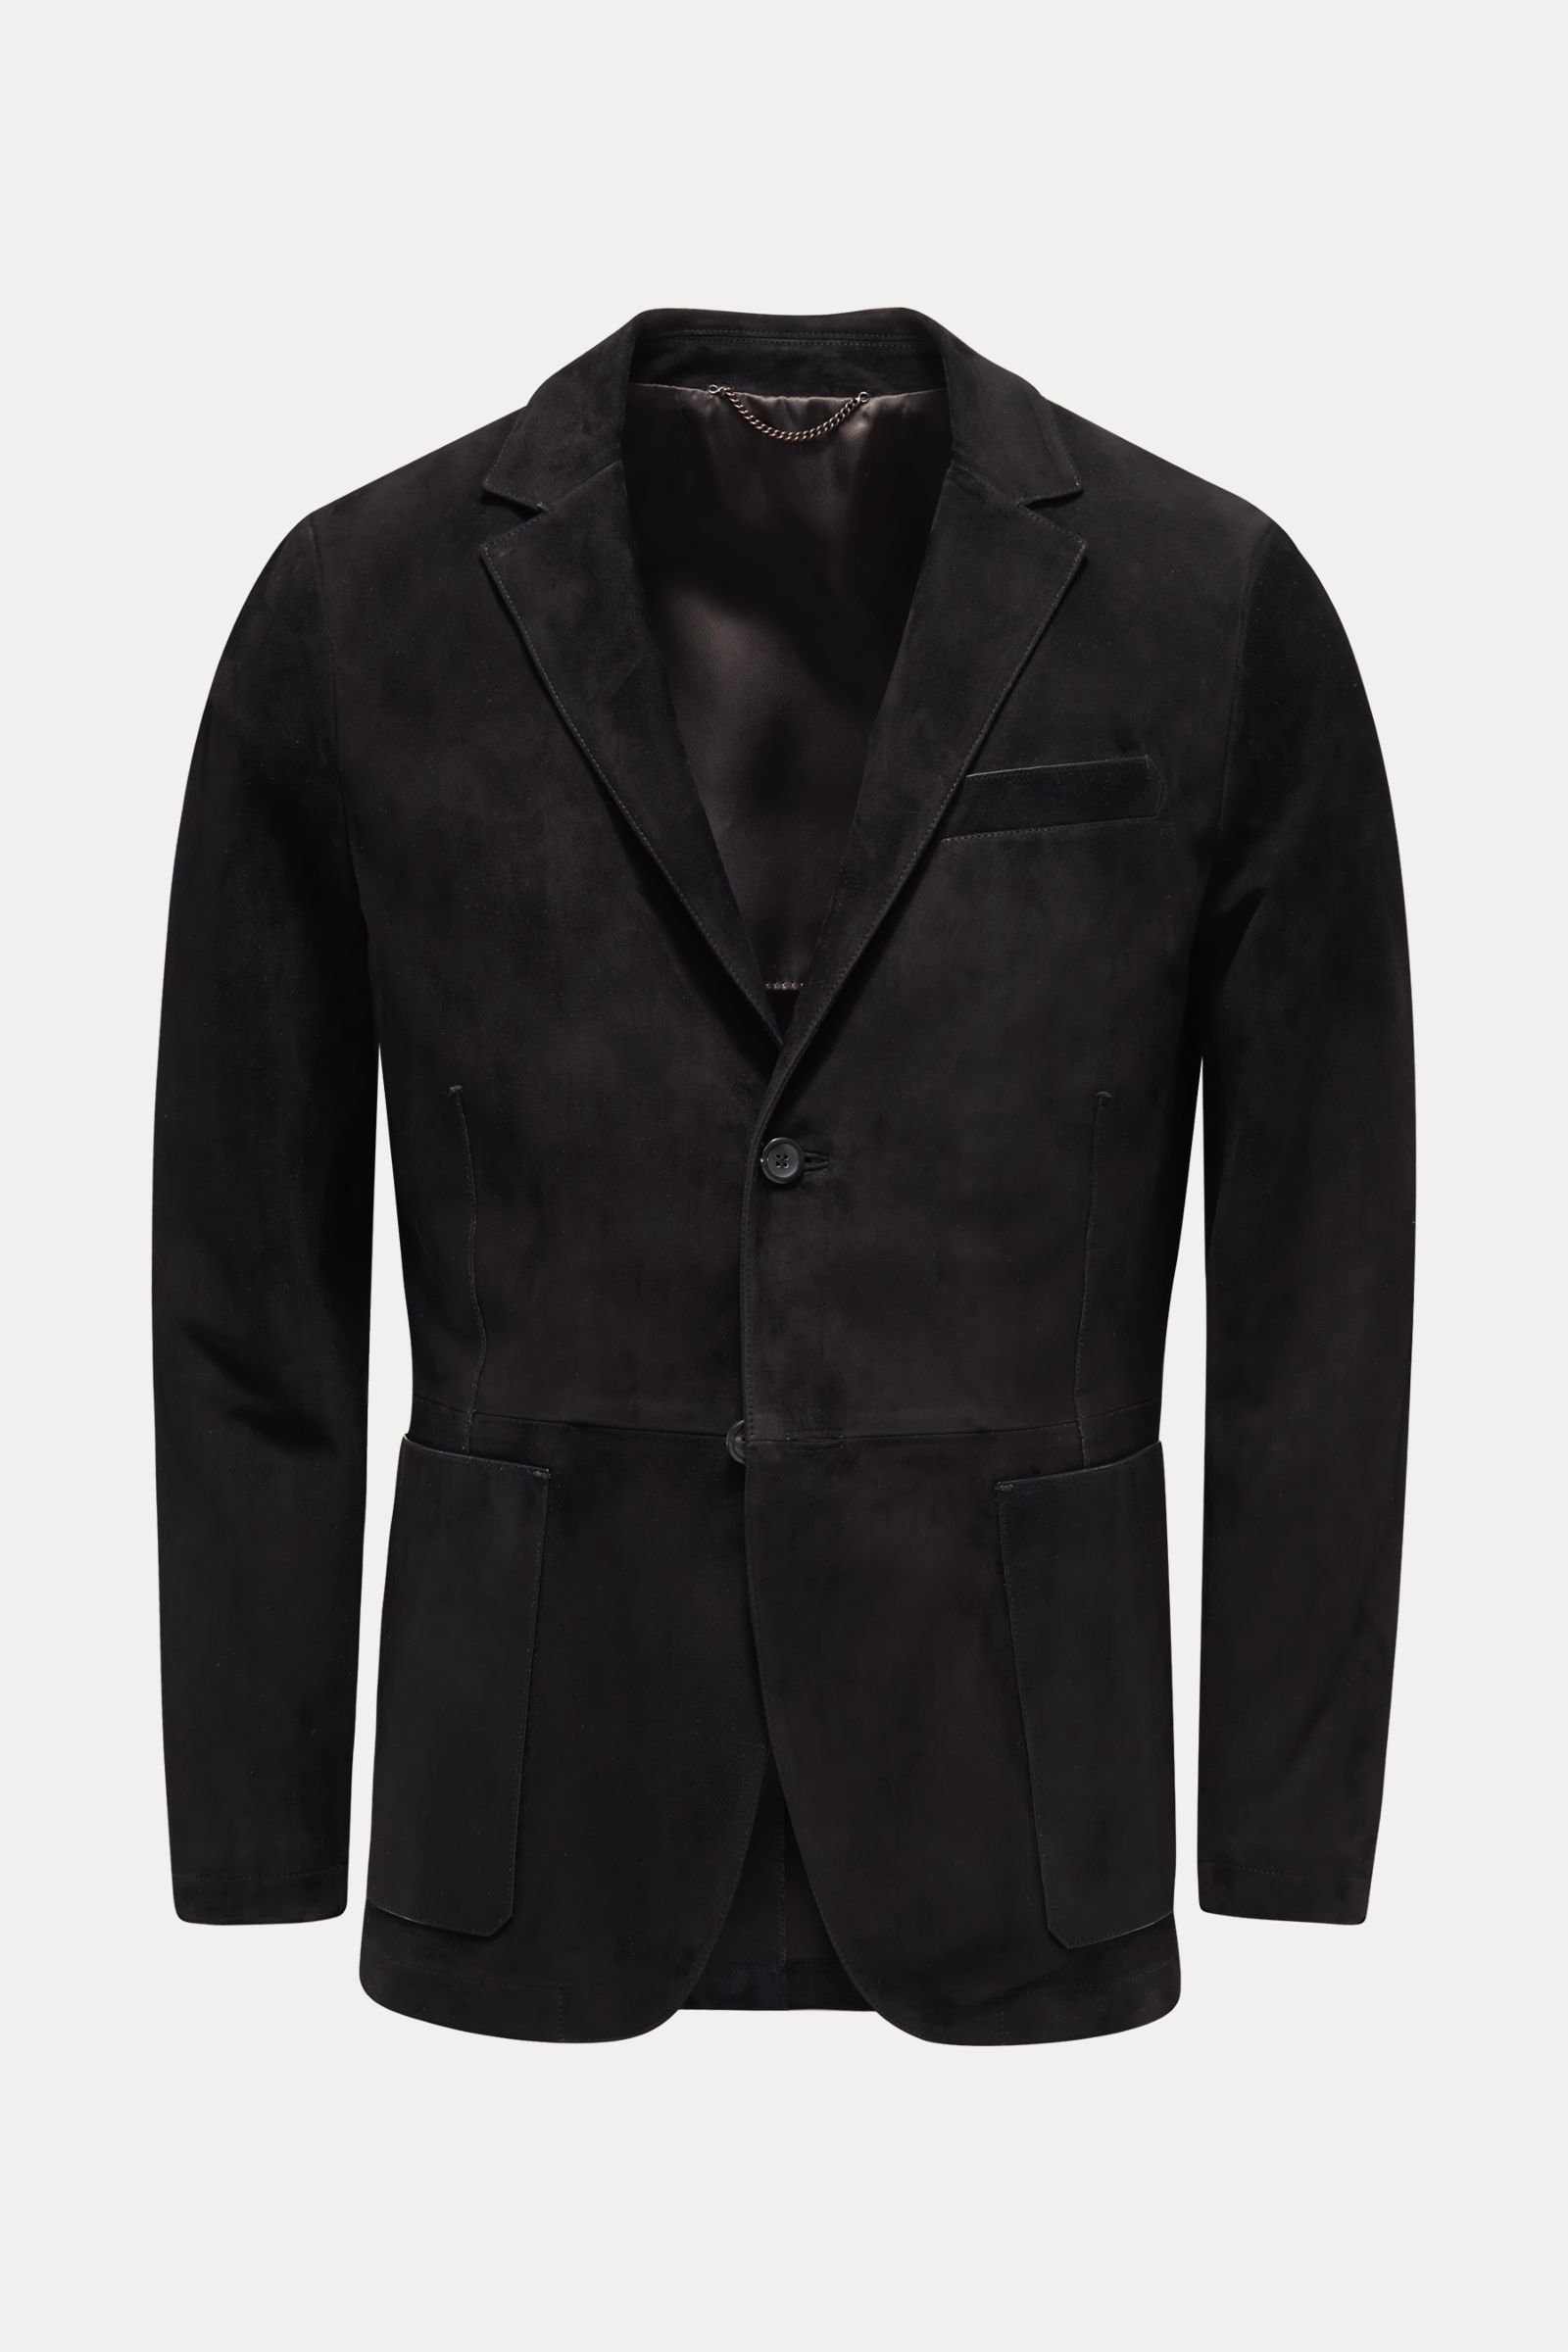 Suede jacket black